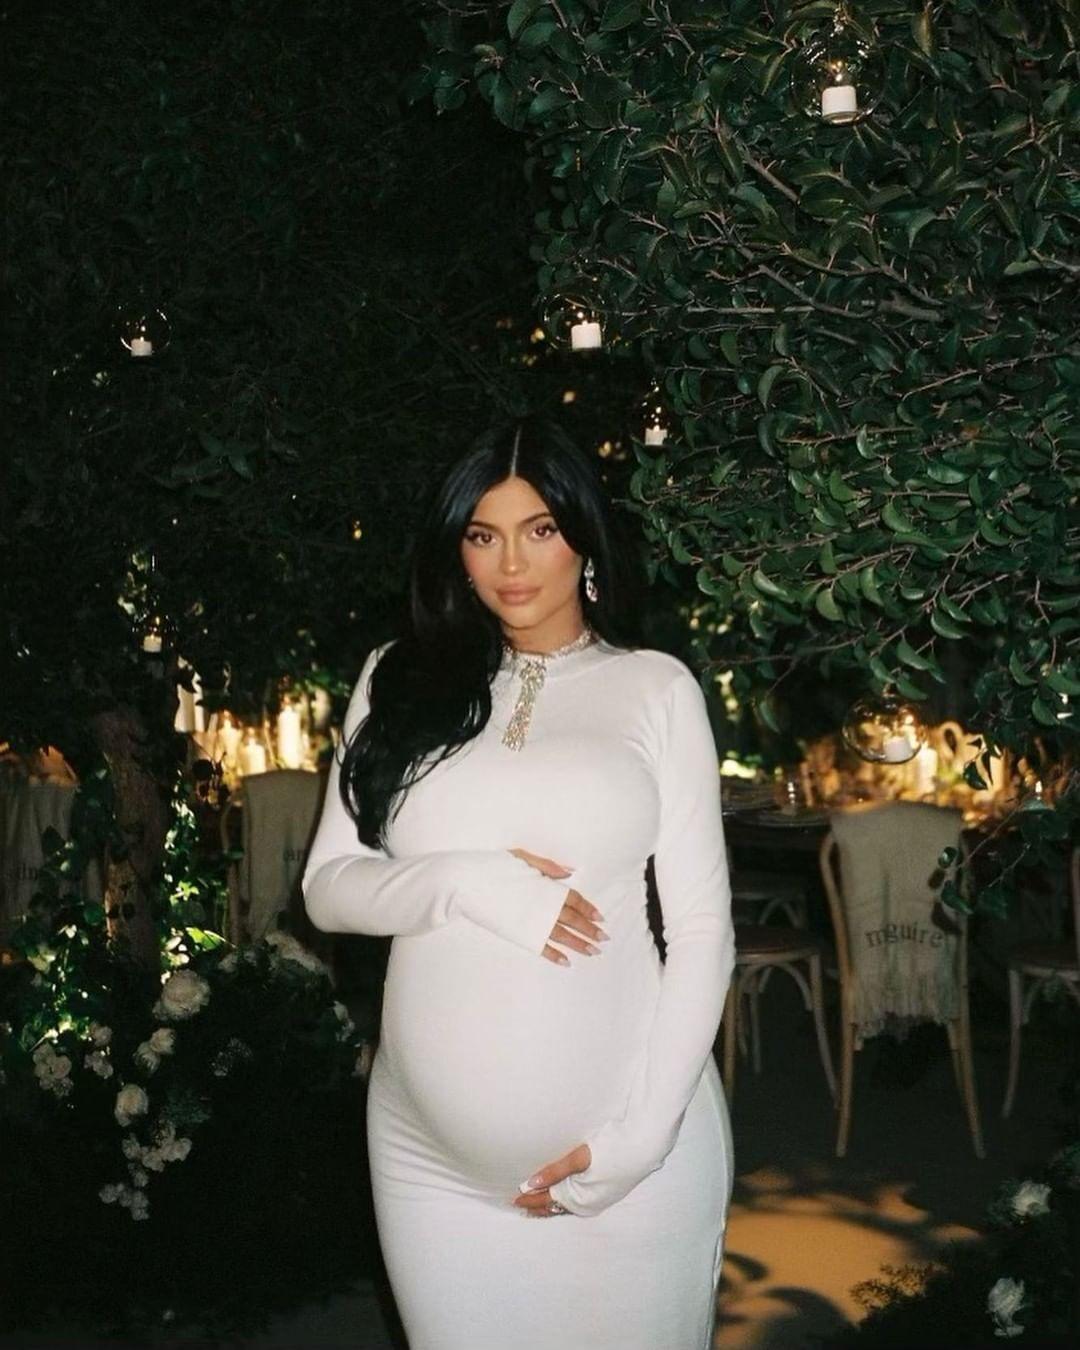 Kylie Jenner Flaunts Inside Luxury Baby Shower, Baby's Gender Revealed?!